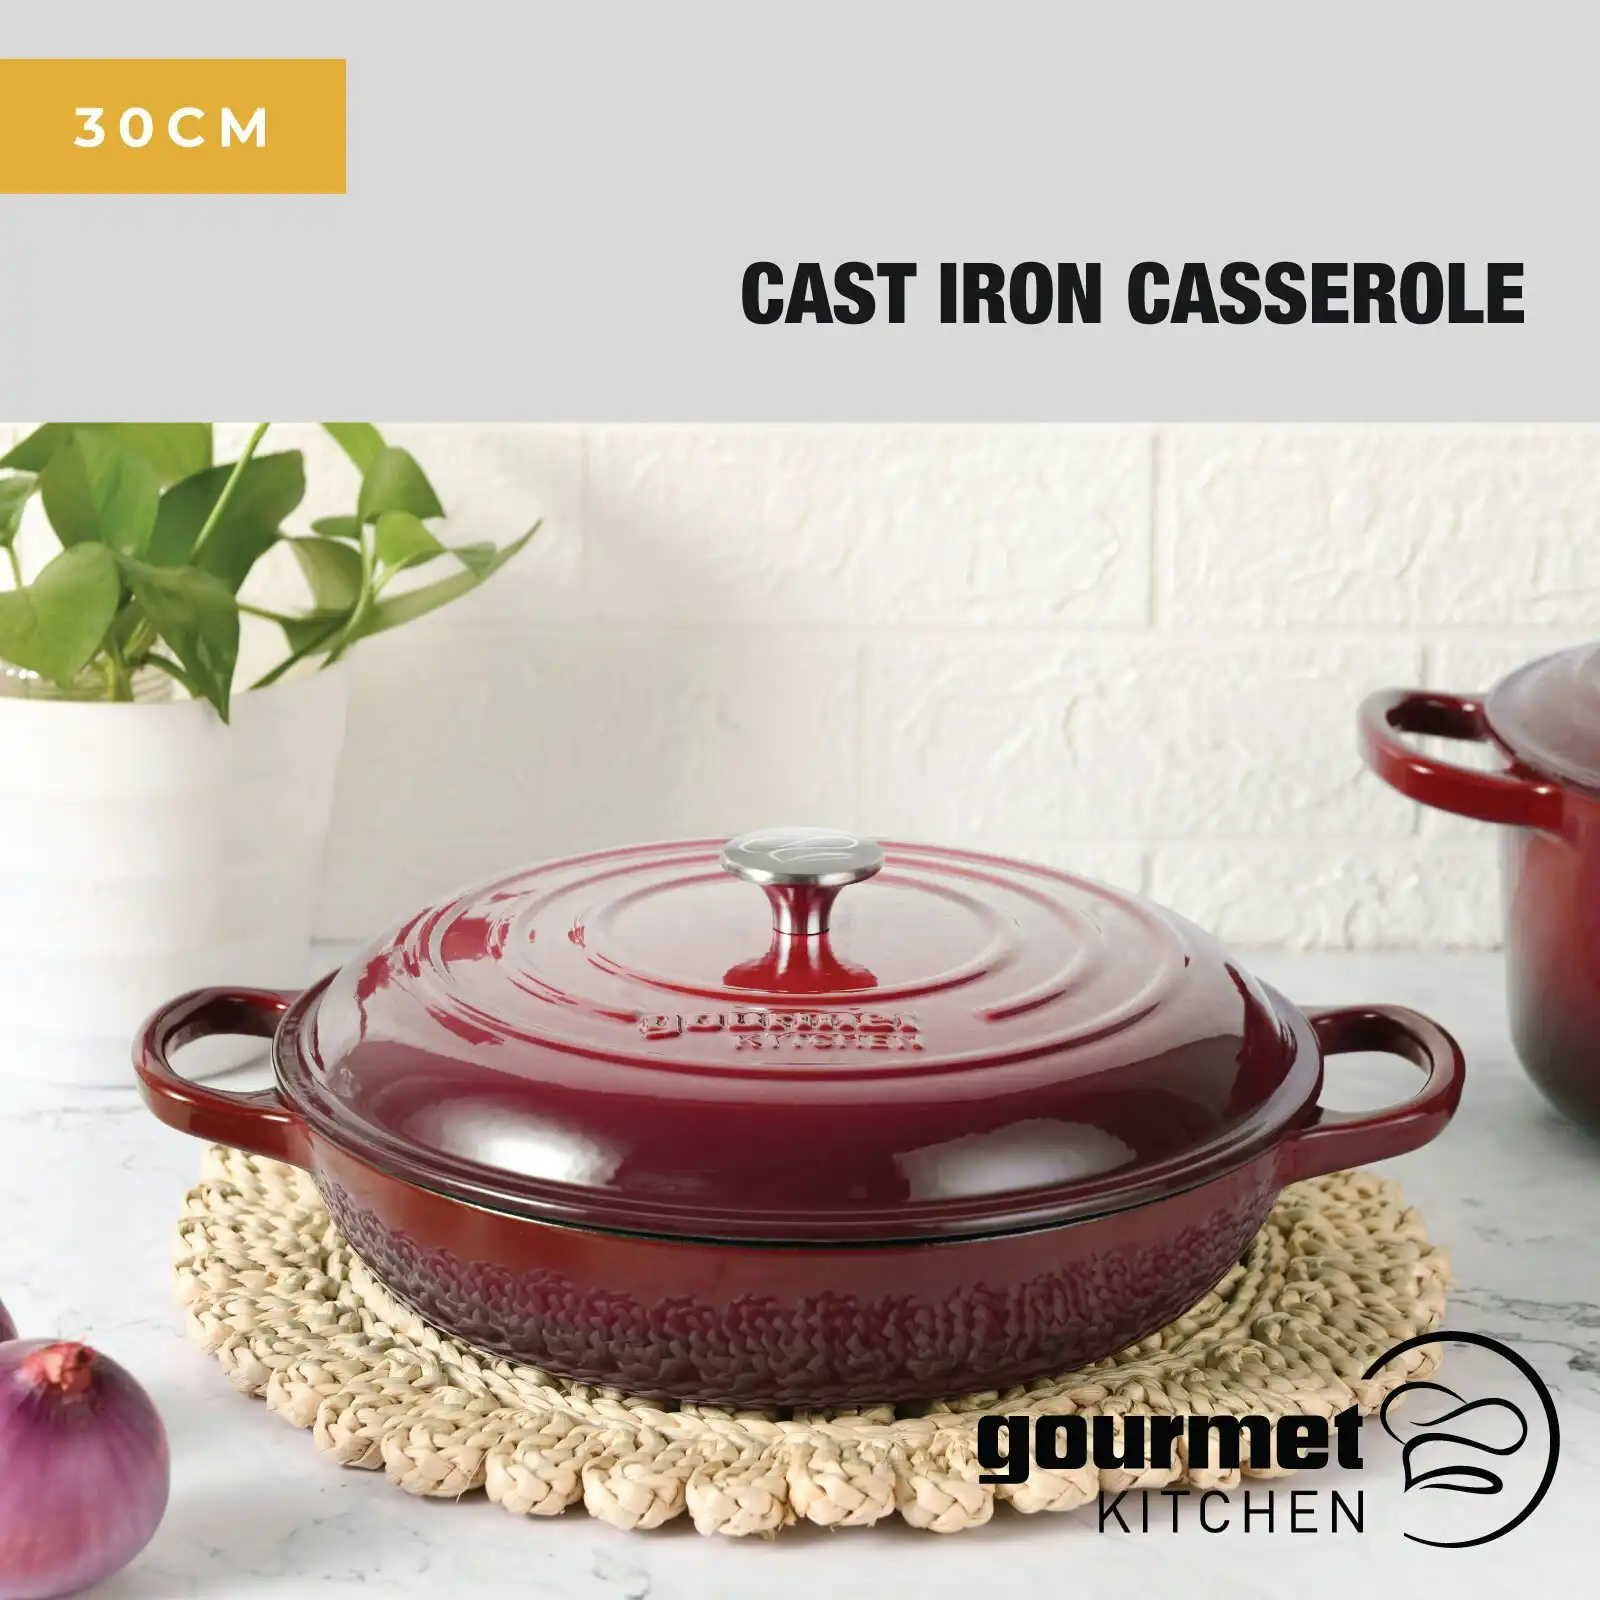 Gourmet Kitchen Cast Iron Shallow Casserole 30cm Black Cherry Red